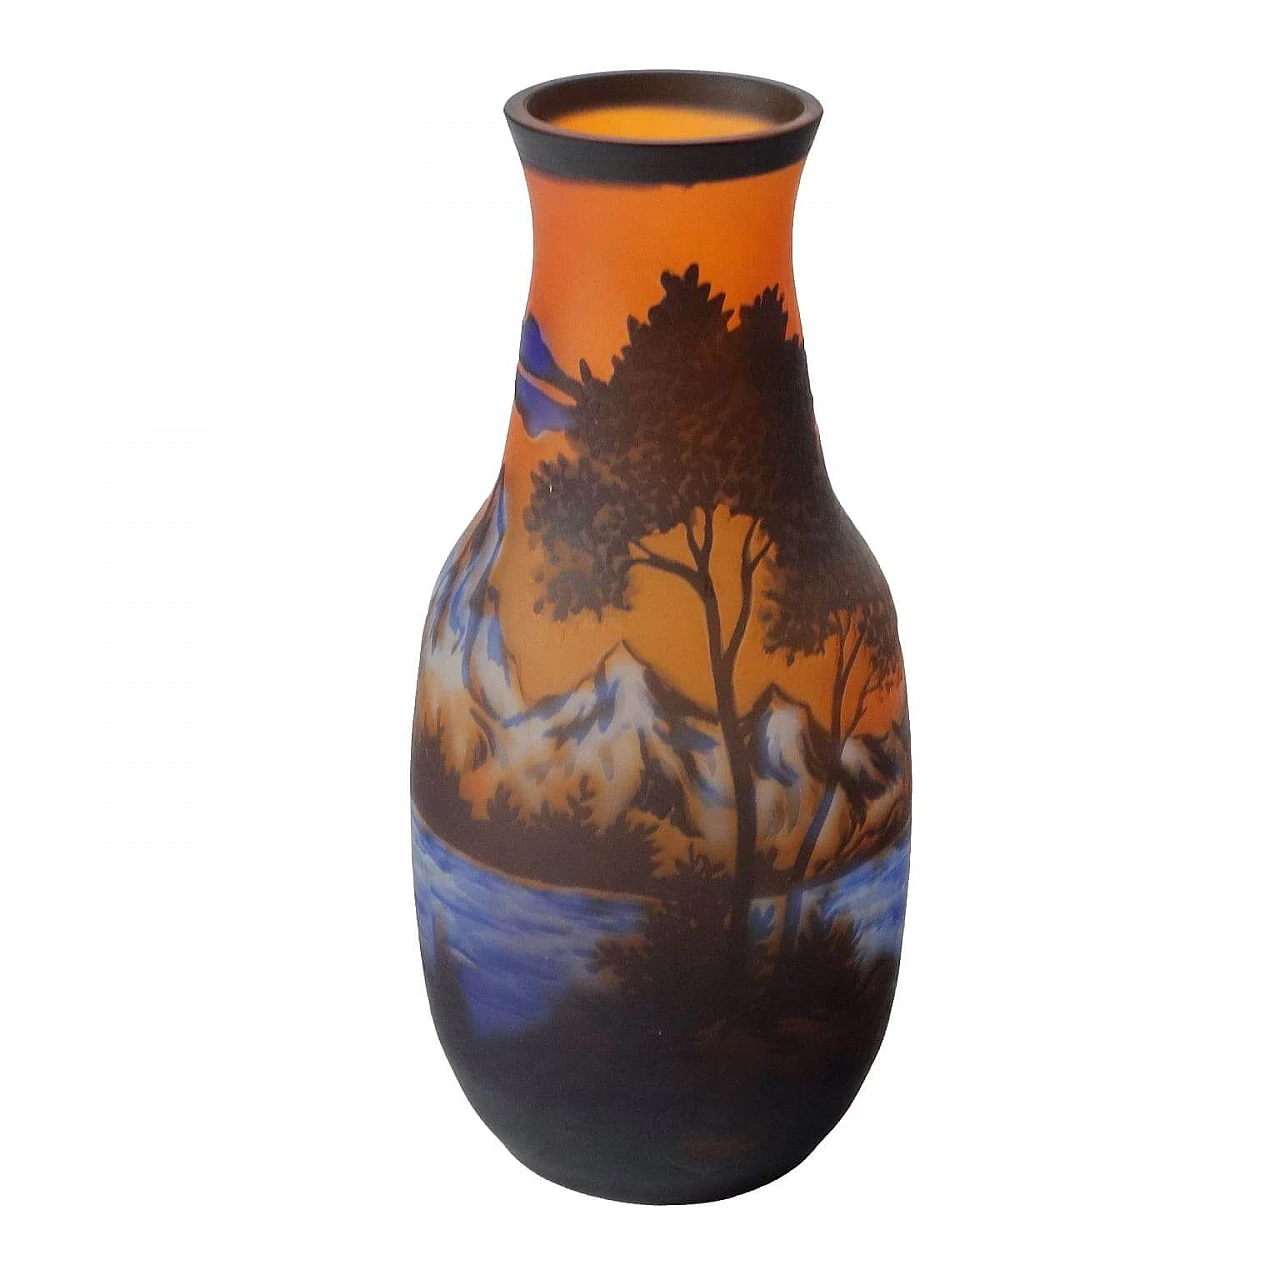 Polychrome glass vase by Gallé 1